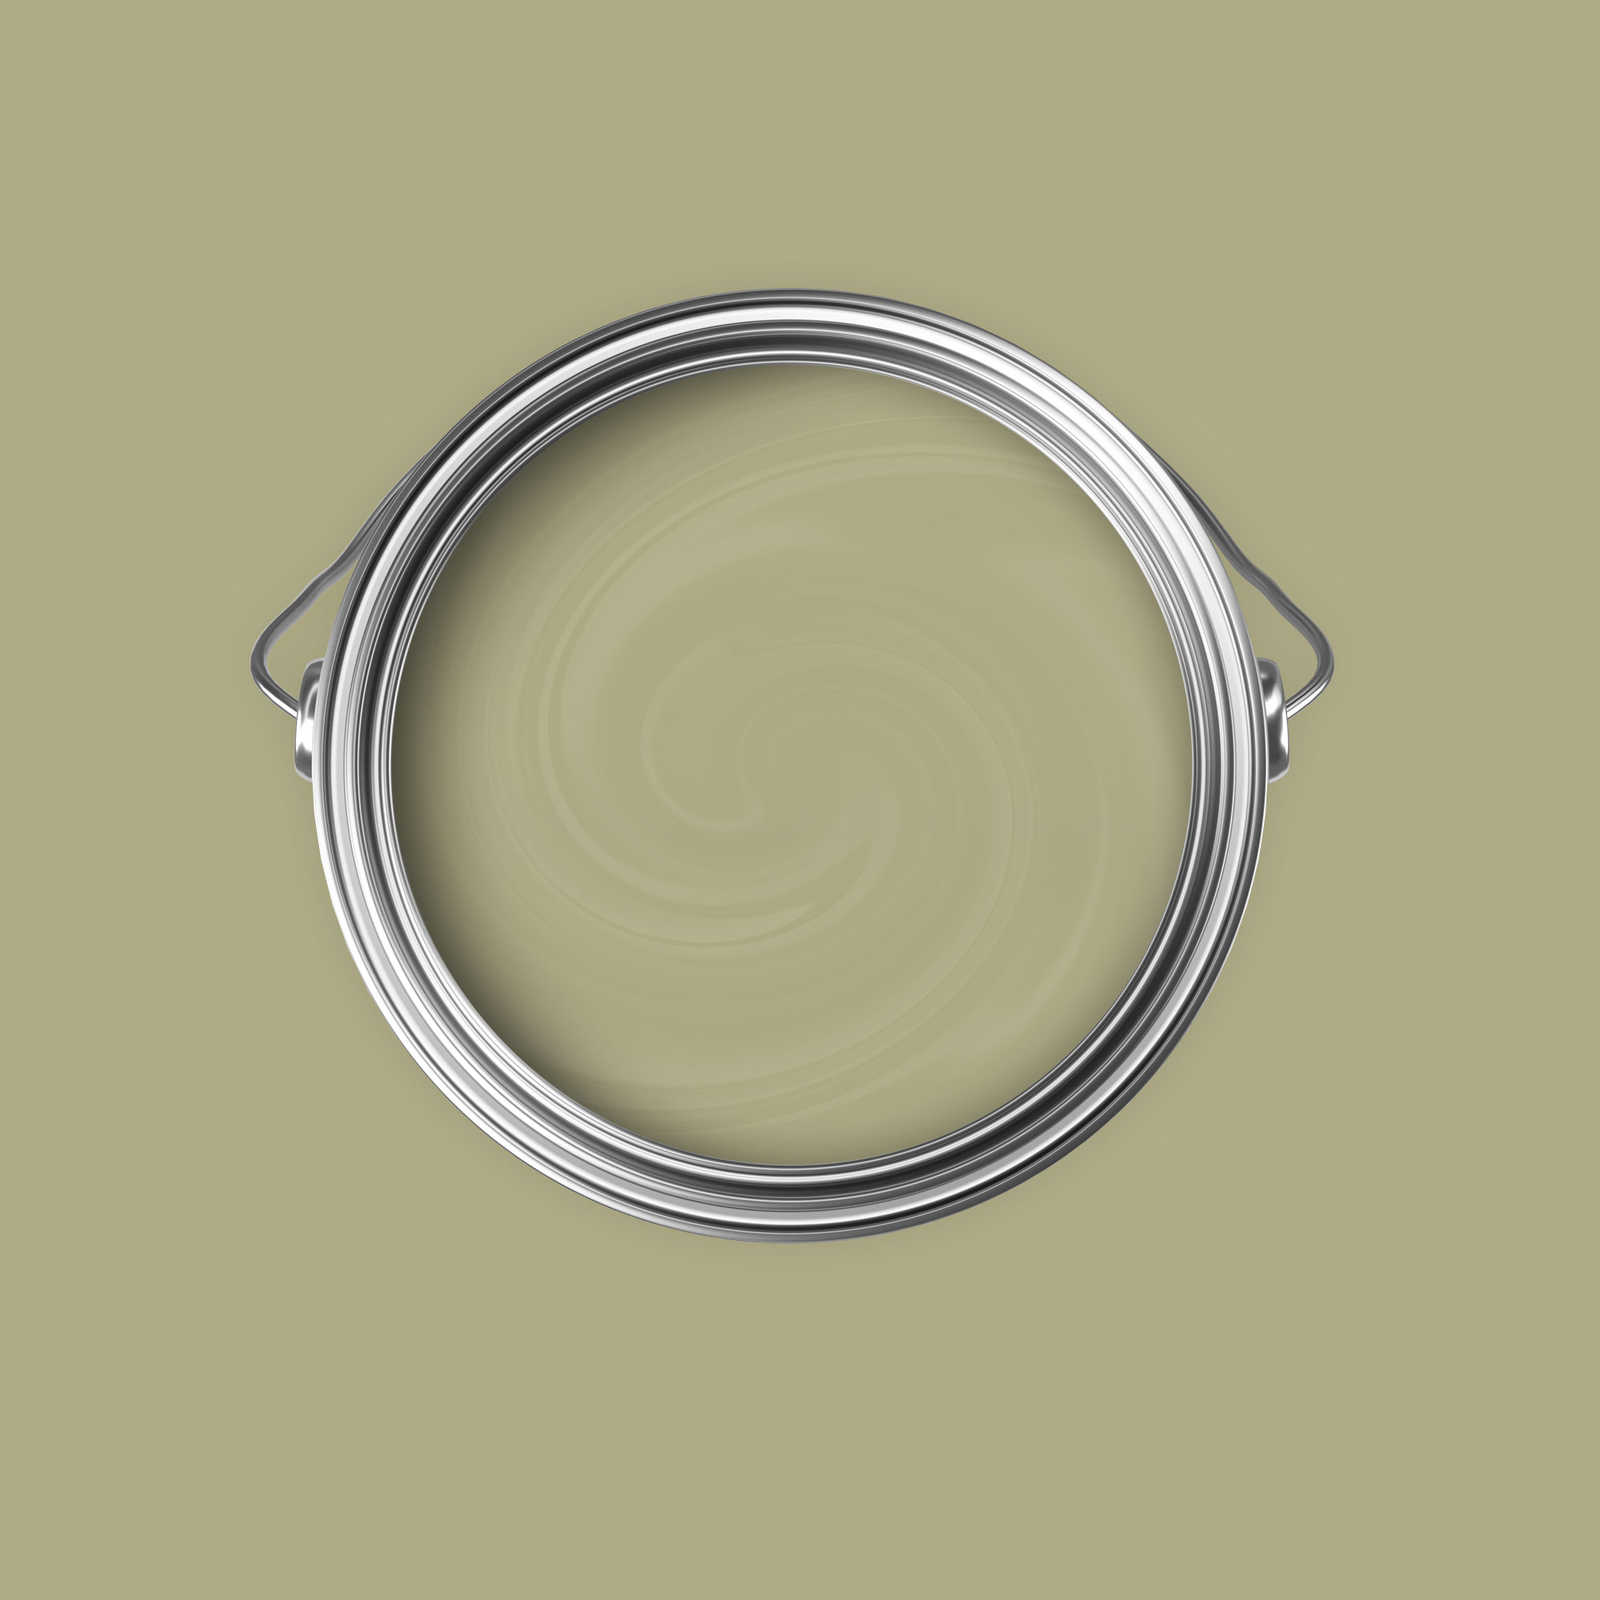             Premium Wall Paint Fresh Khaki »Lucky Lime« NW608 – 5 litre
        